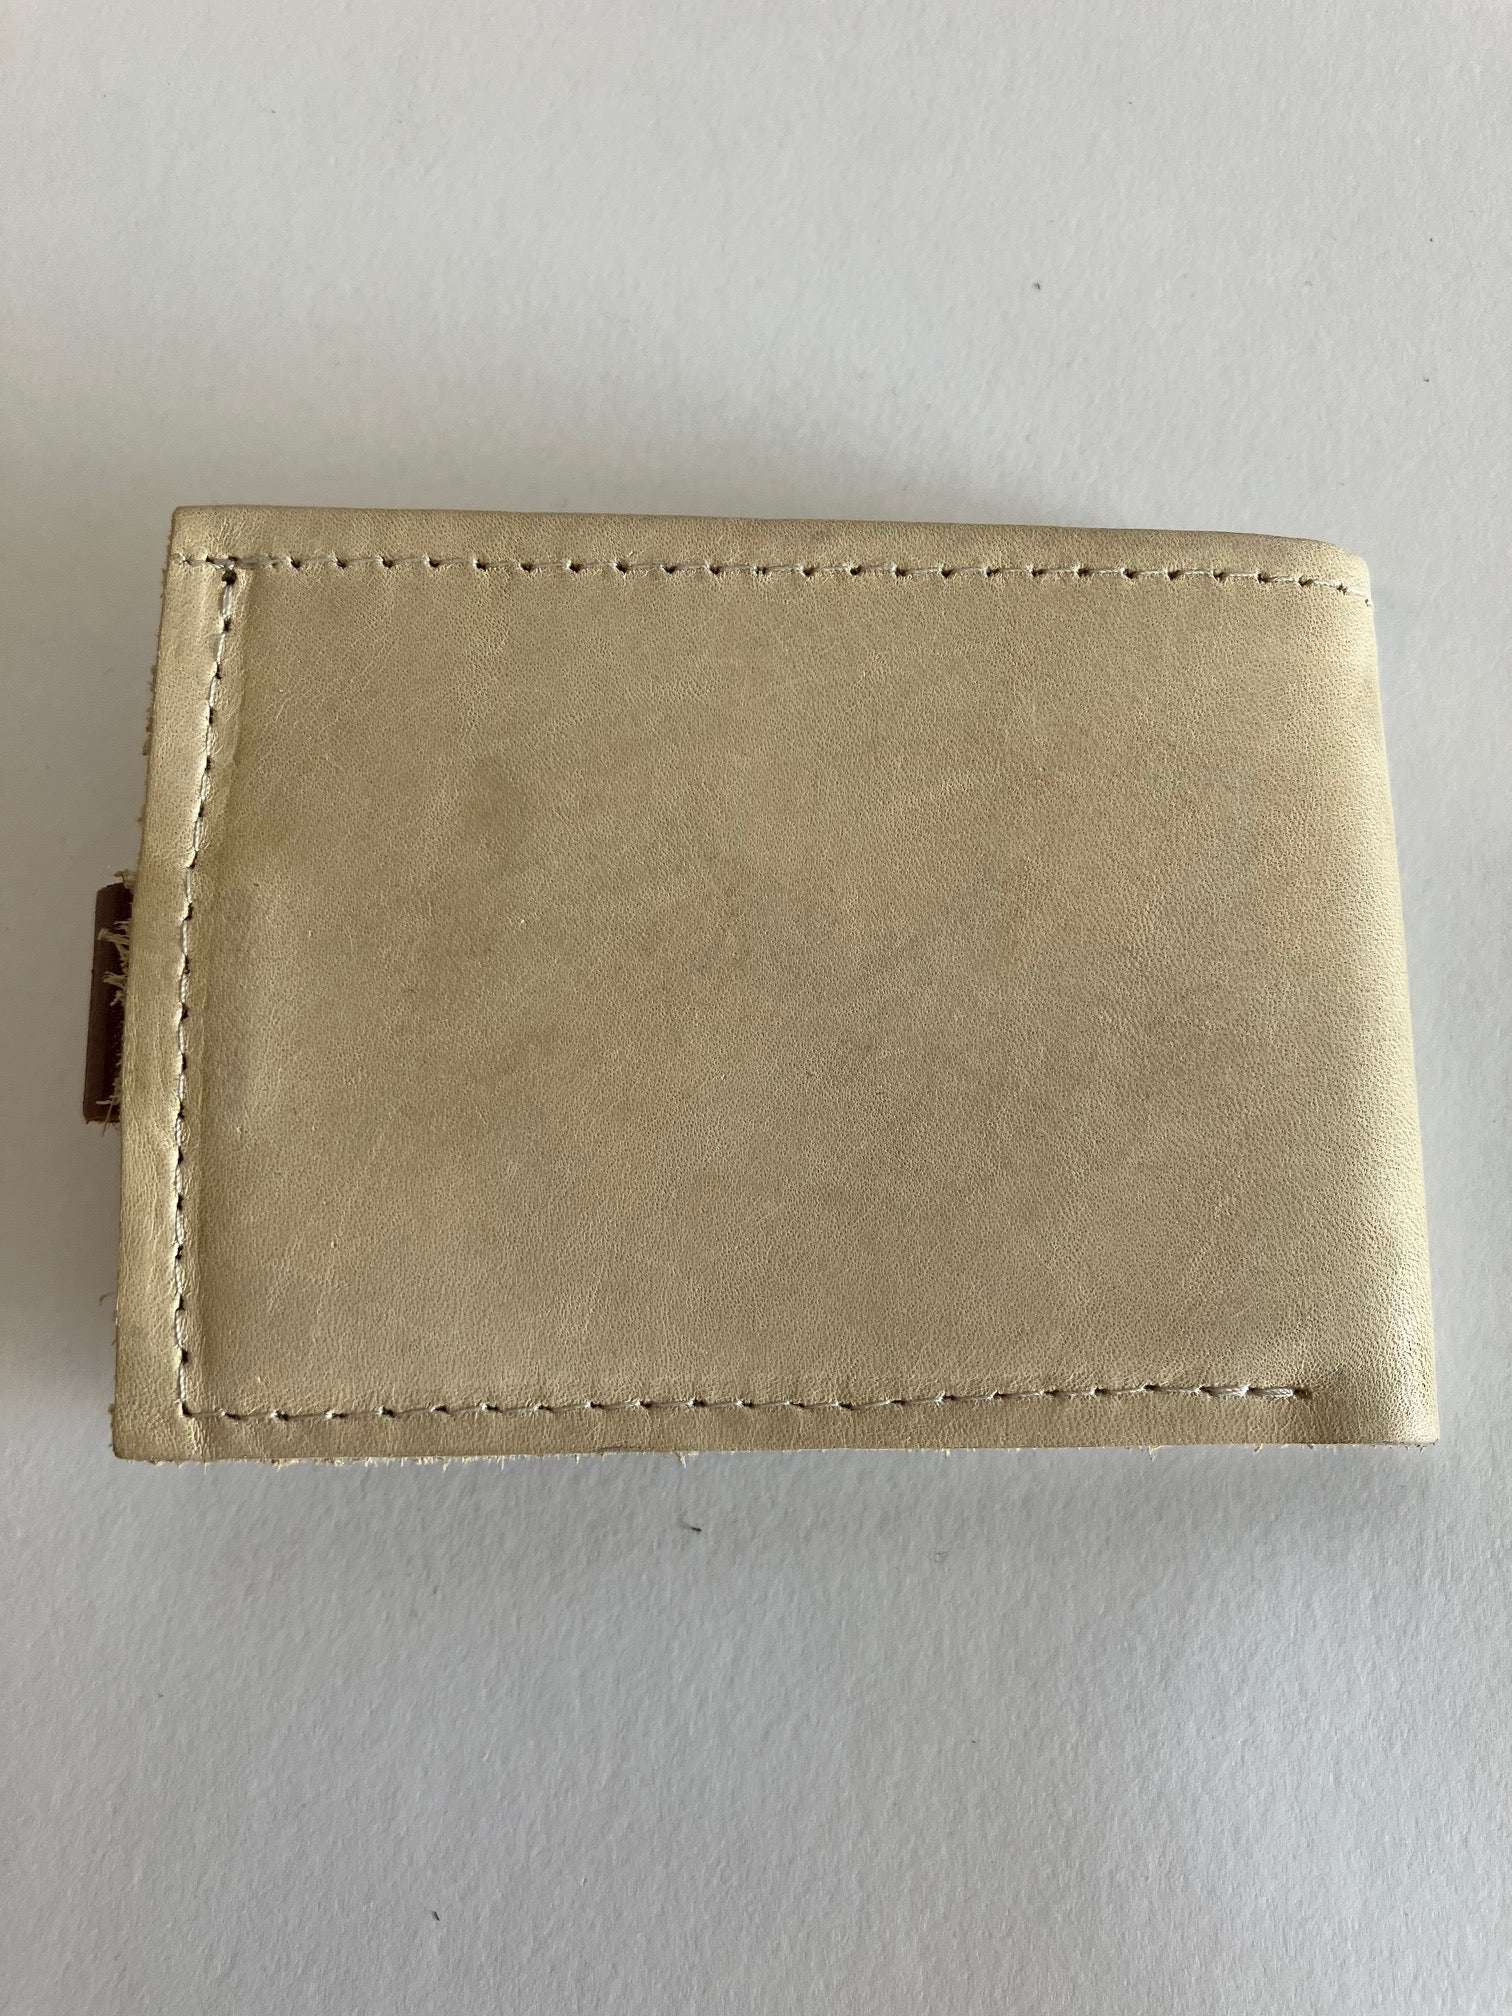 SAMPLE. Minimalist bifold ivory leather wallet